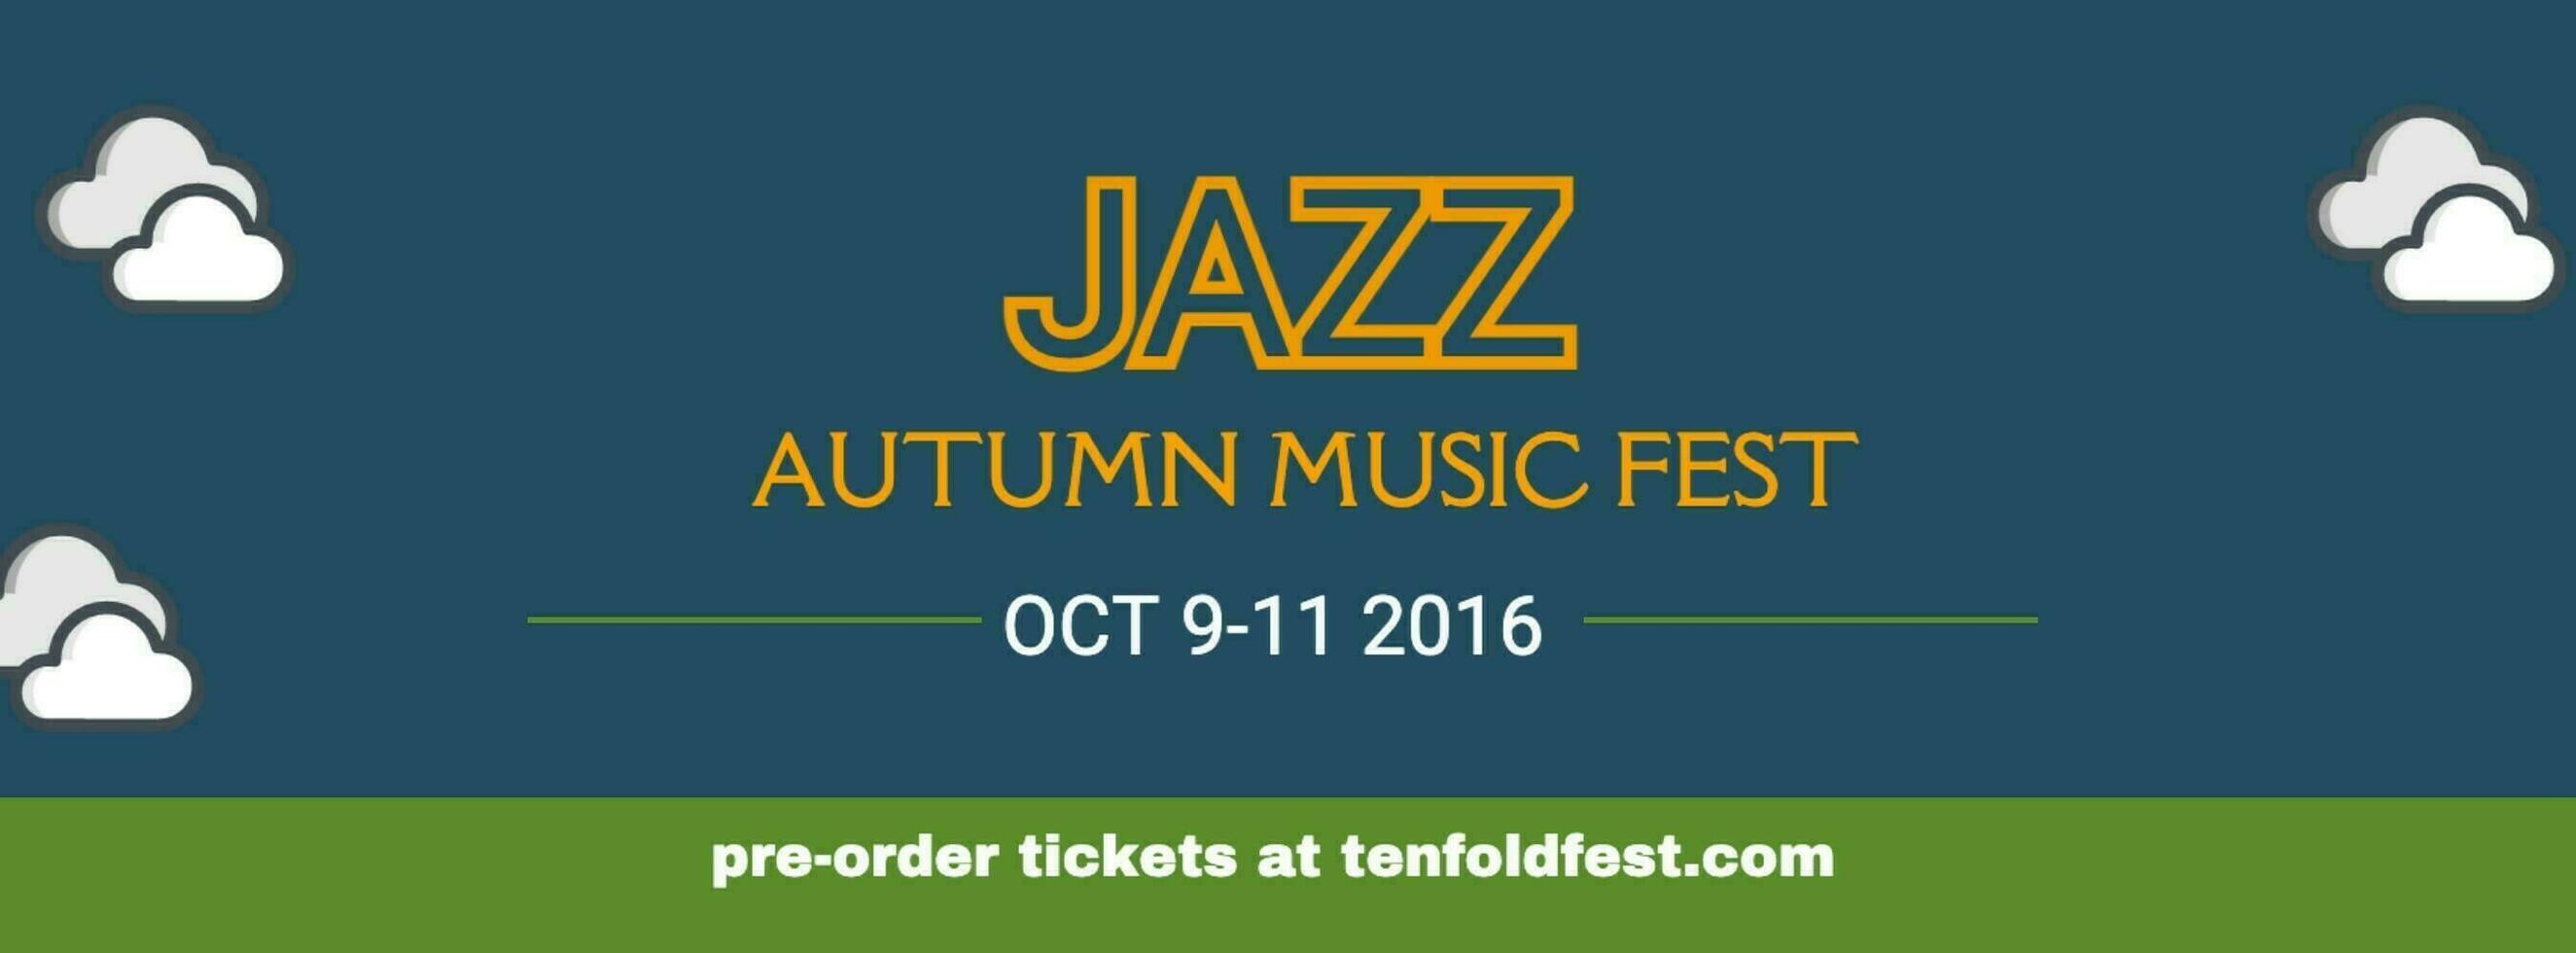 Jazz Autumn Music Fest template